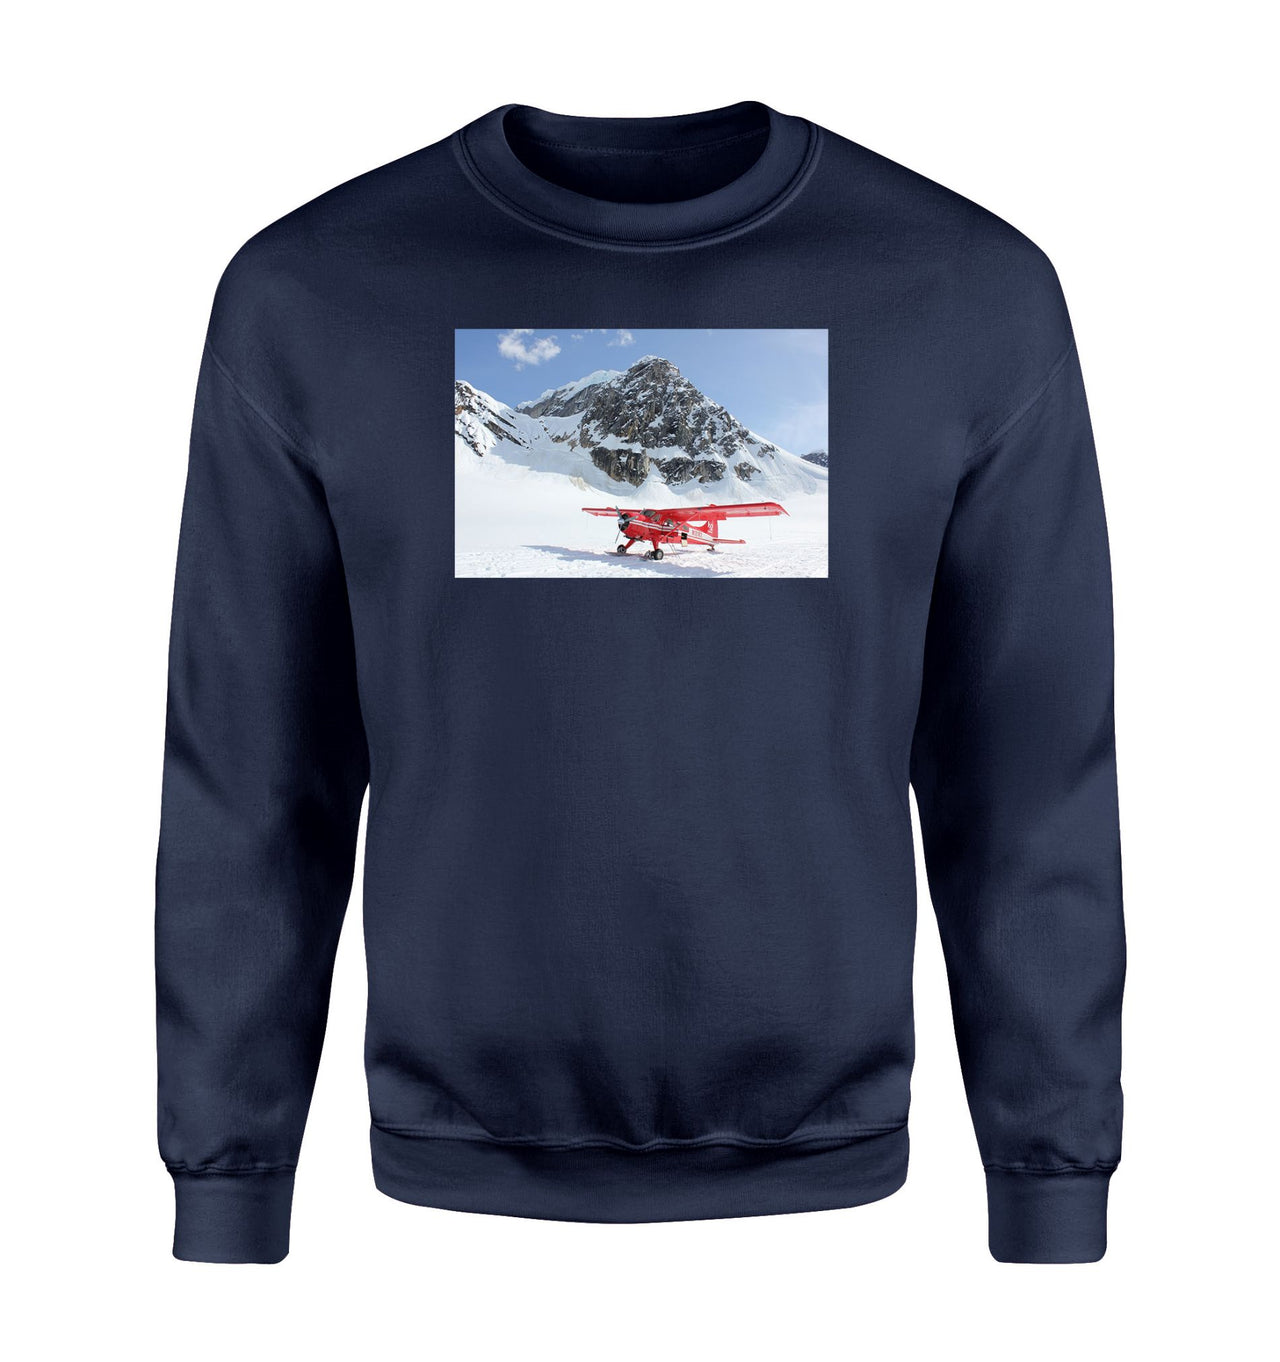 Amazing Snow Airplane Designed Sweatshirts